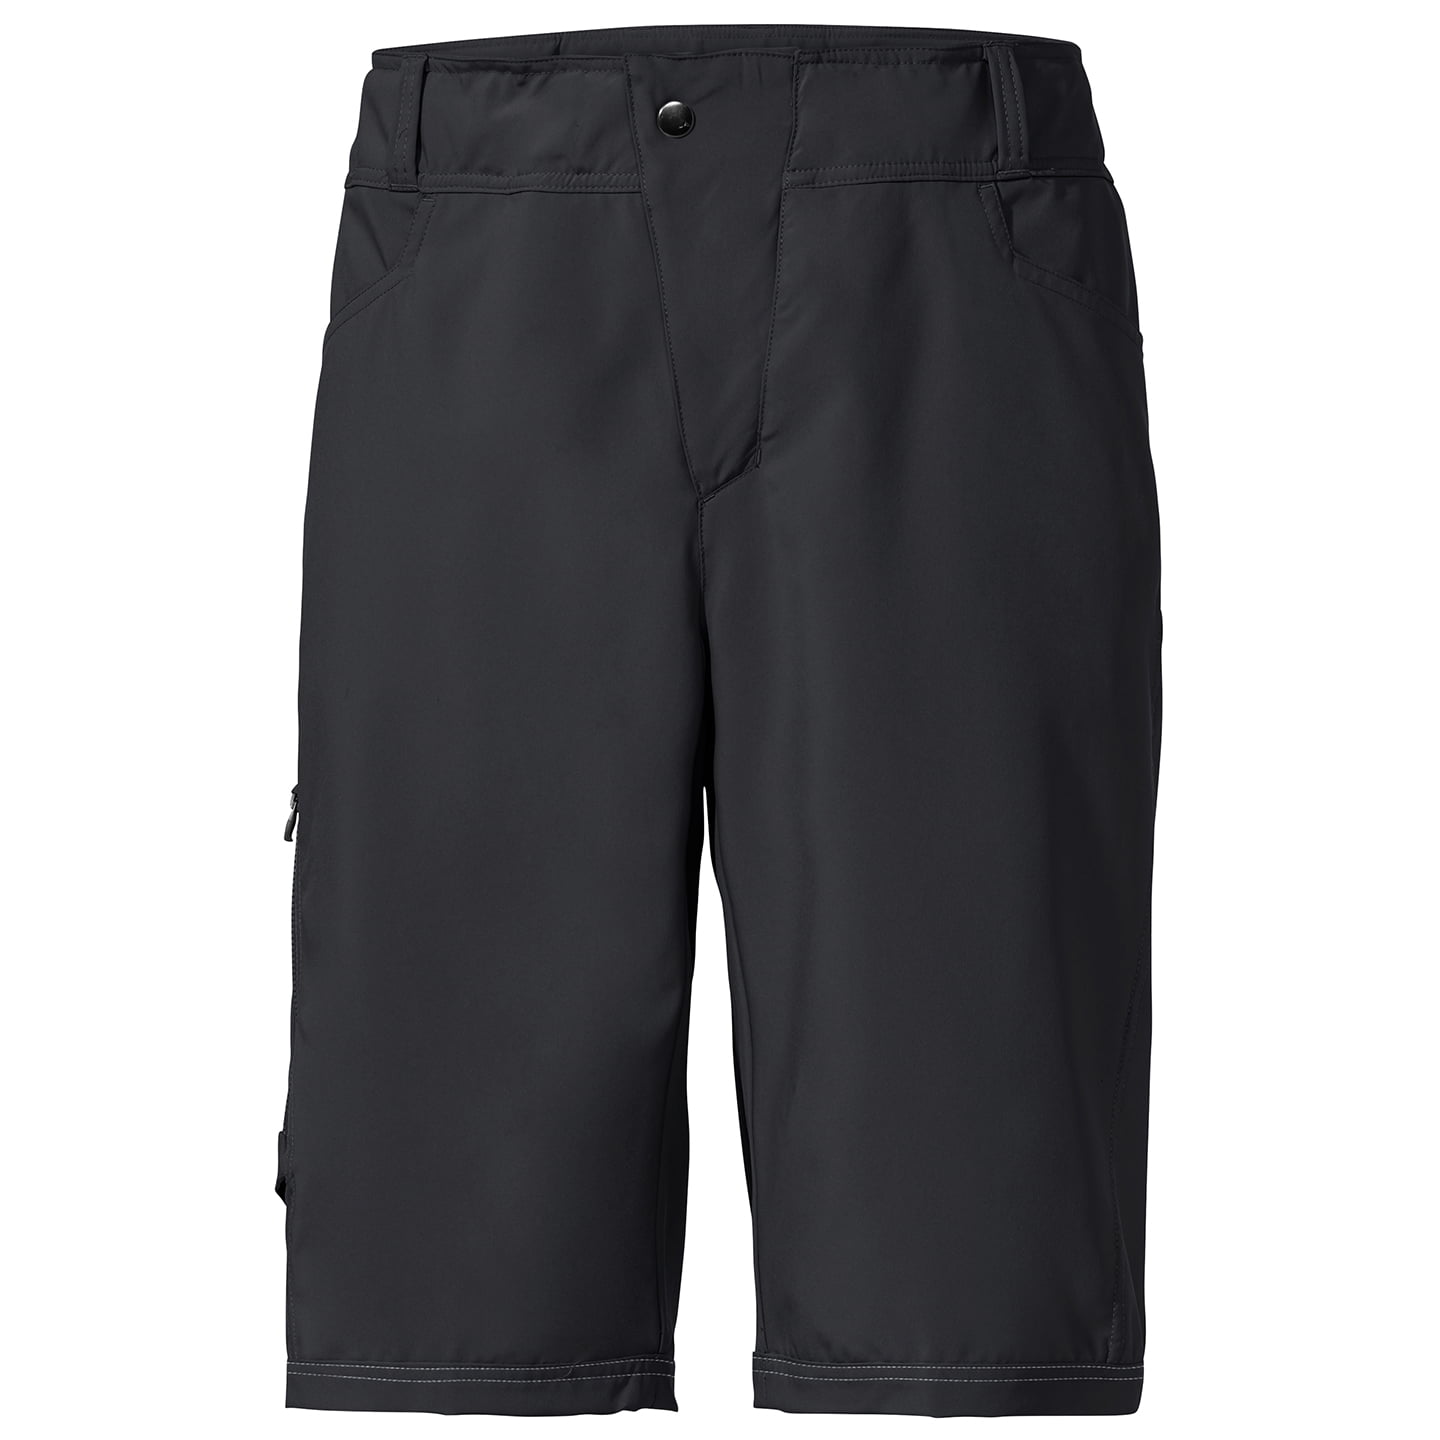 VAUDE Ledro Bike Shorts, for men, size M, MTB shorts, MTB clothing